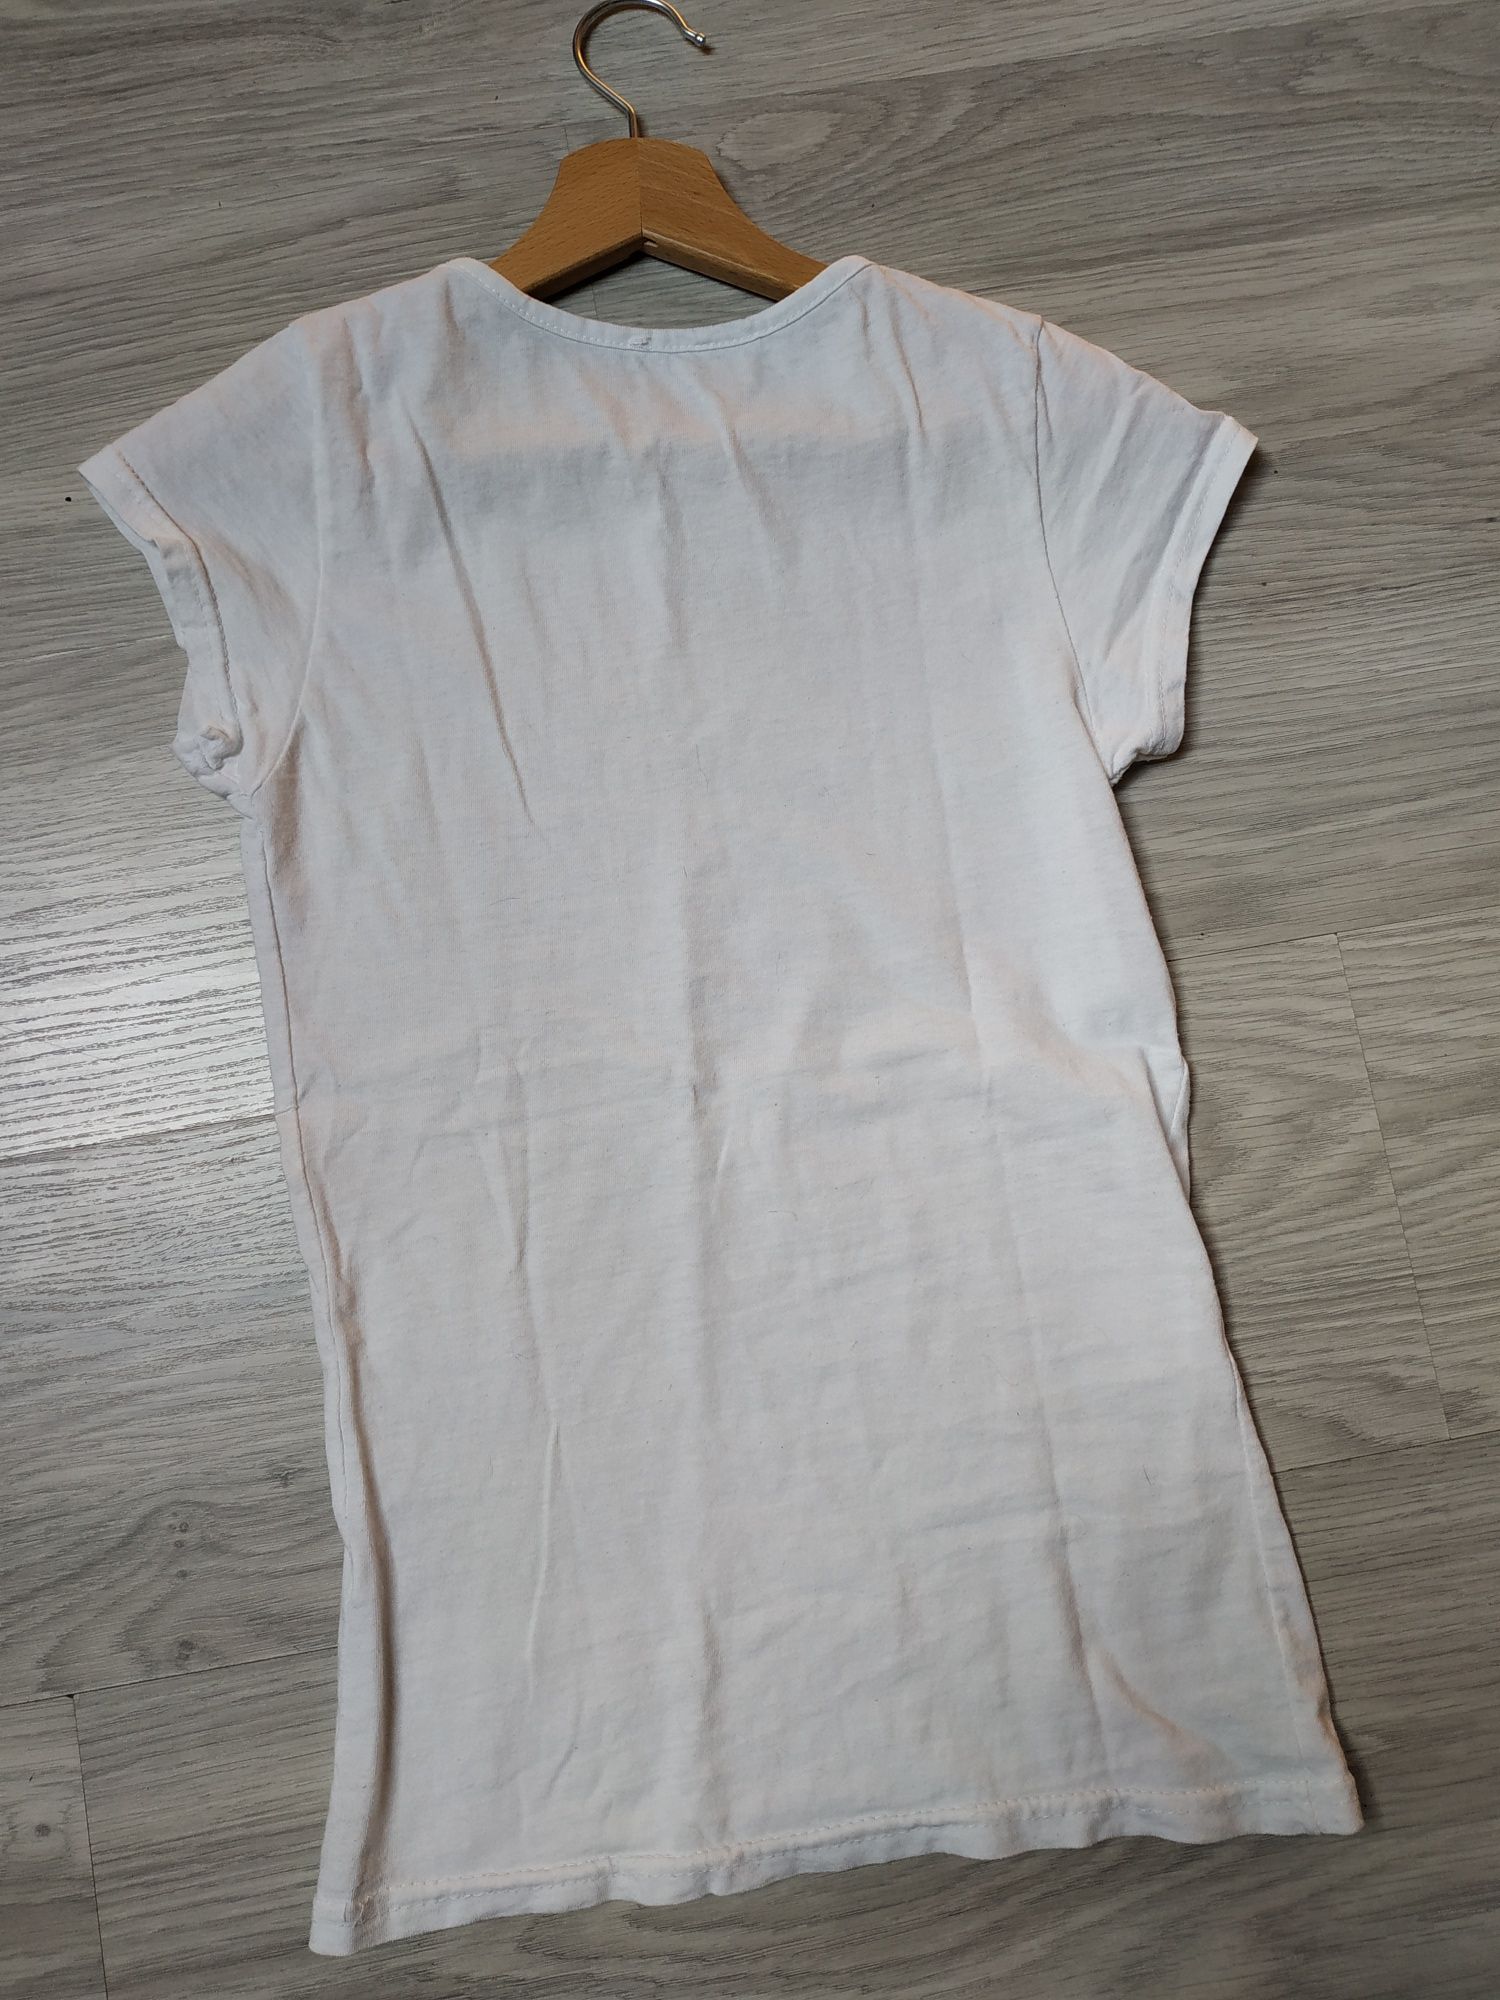 Bluzka damska koszulka bawełniana t-shirt podkoszulek S-M